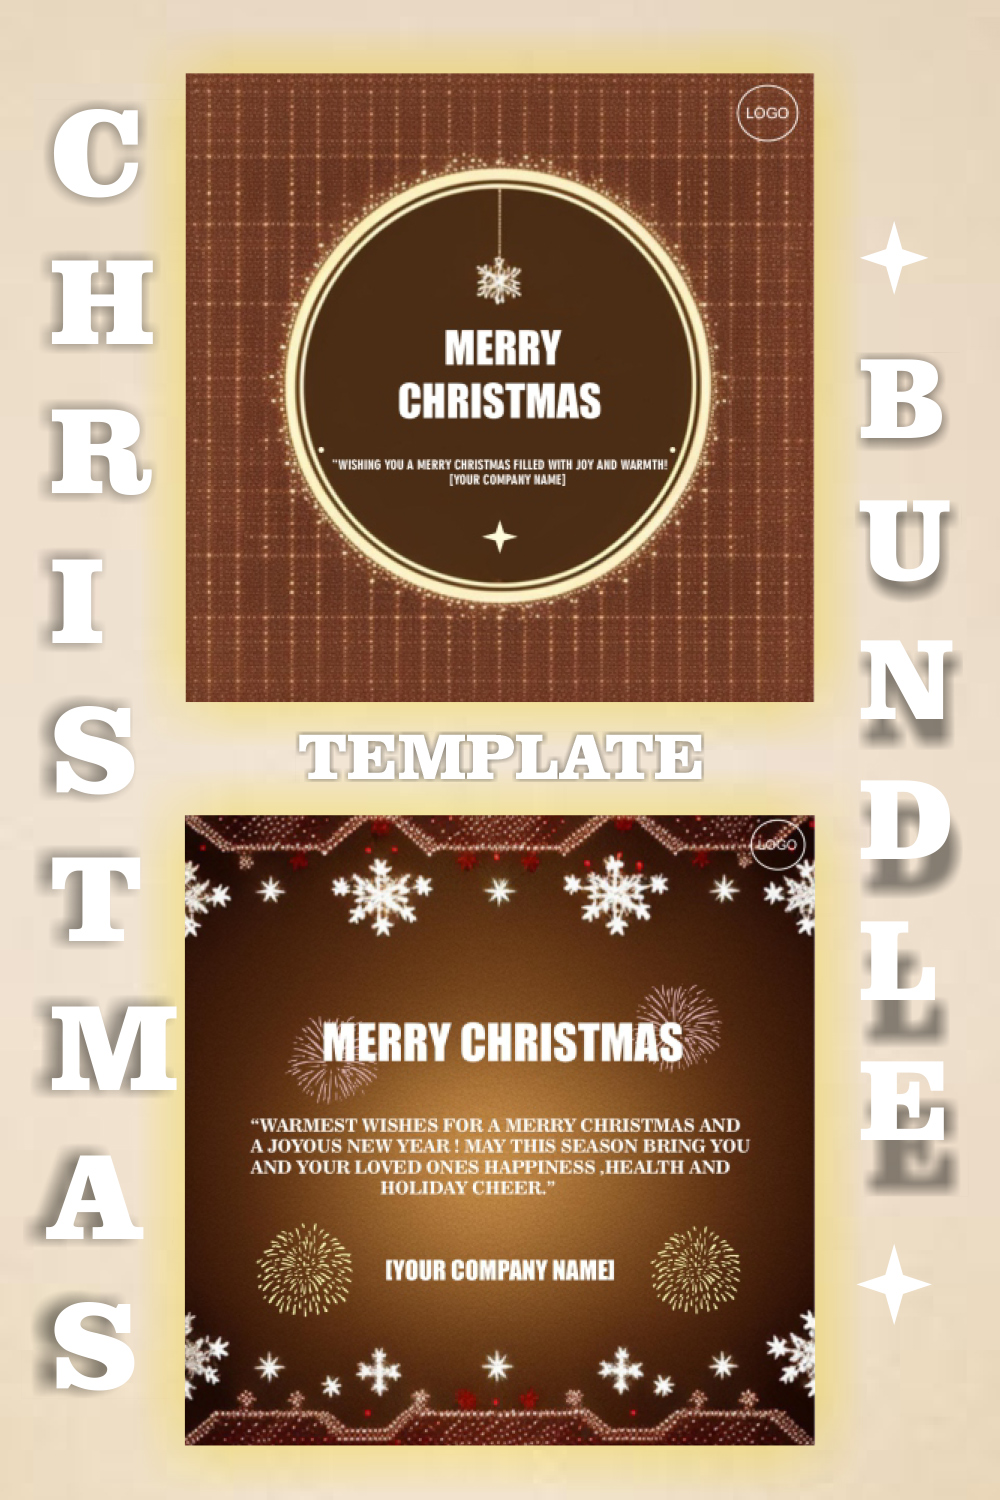 "CHRISTMAS BUSINESS ESSENTIALS BUNDLE" pinterest preview image.